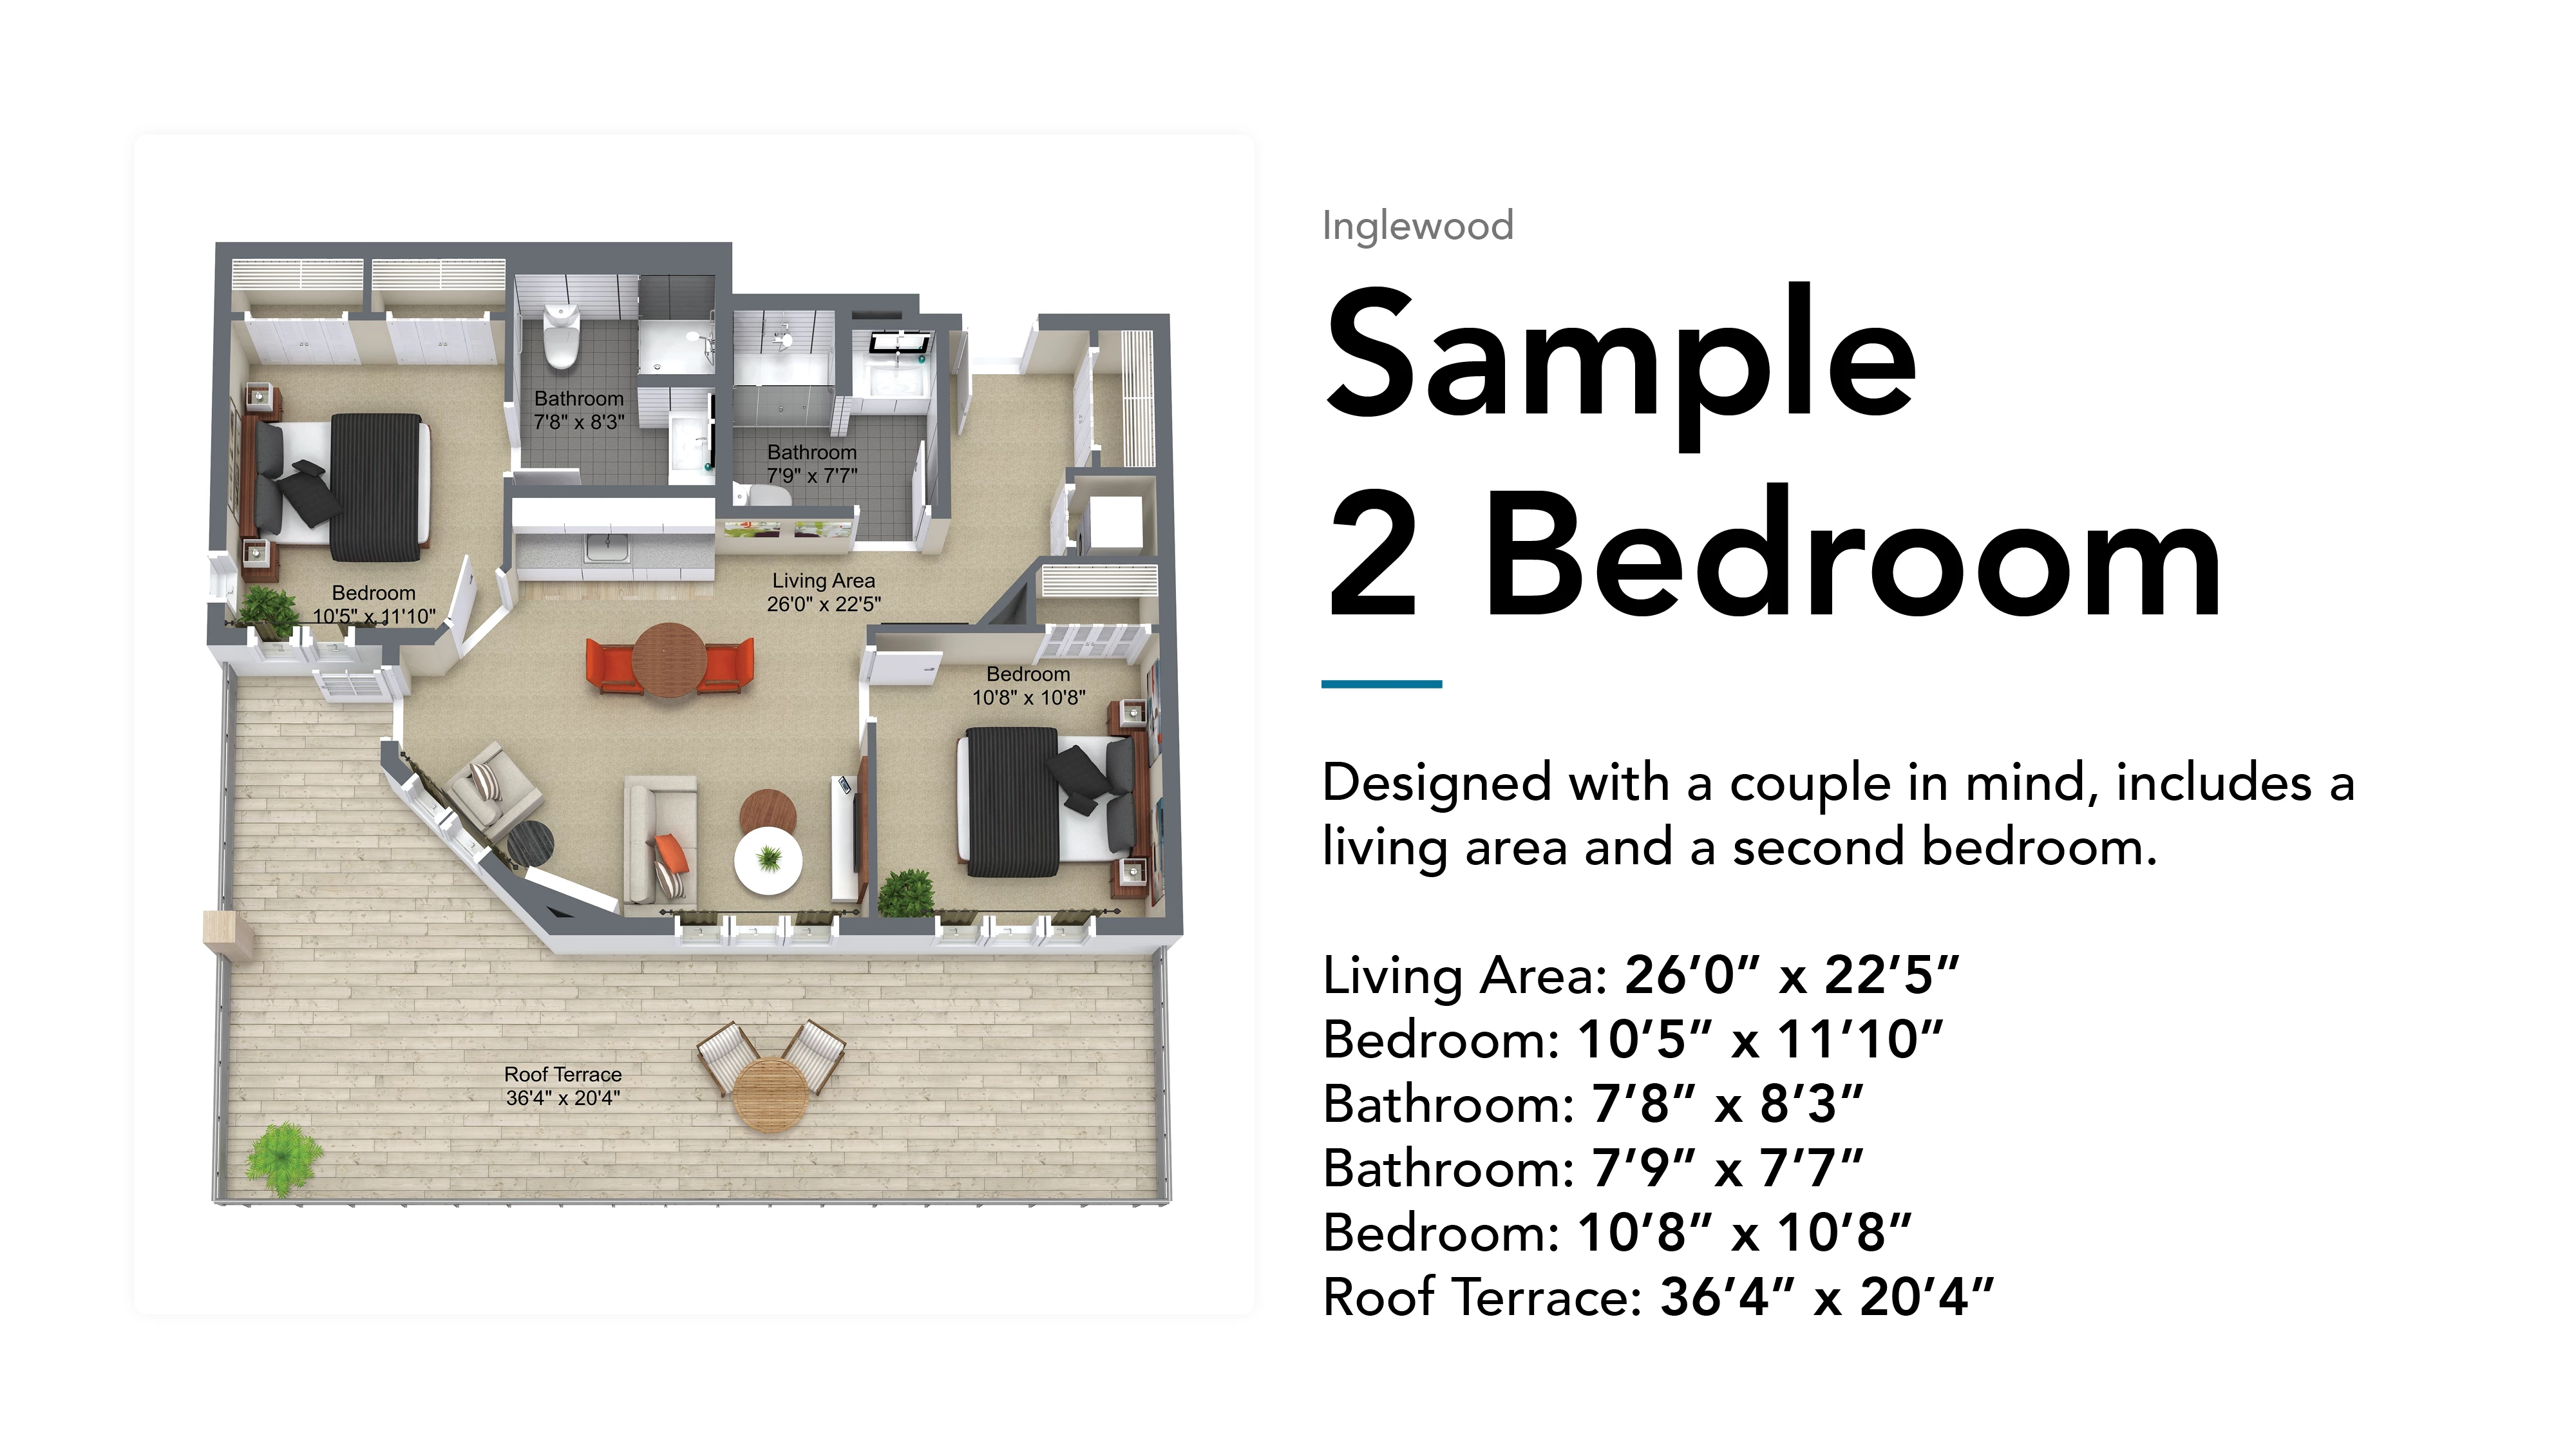 Inglewood Sample 2 Bedroom Floor Plan